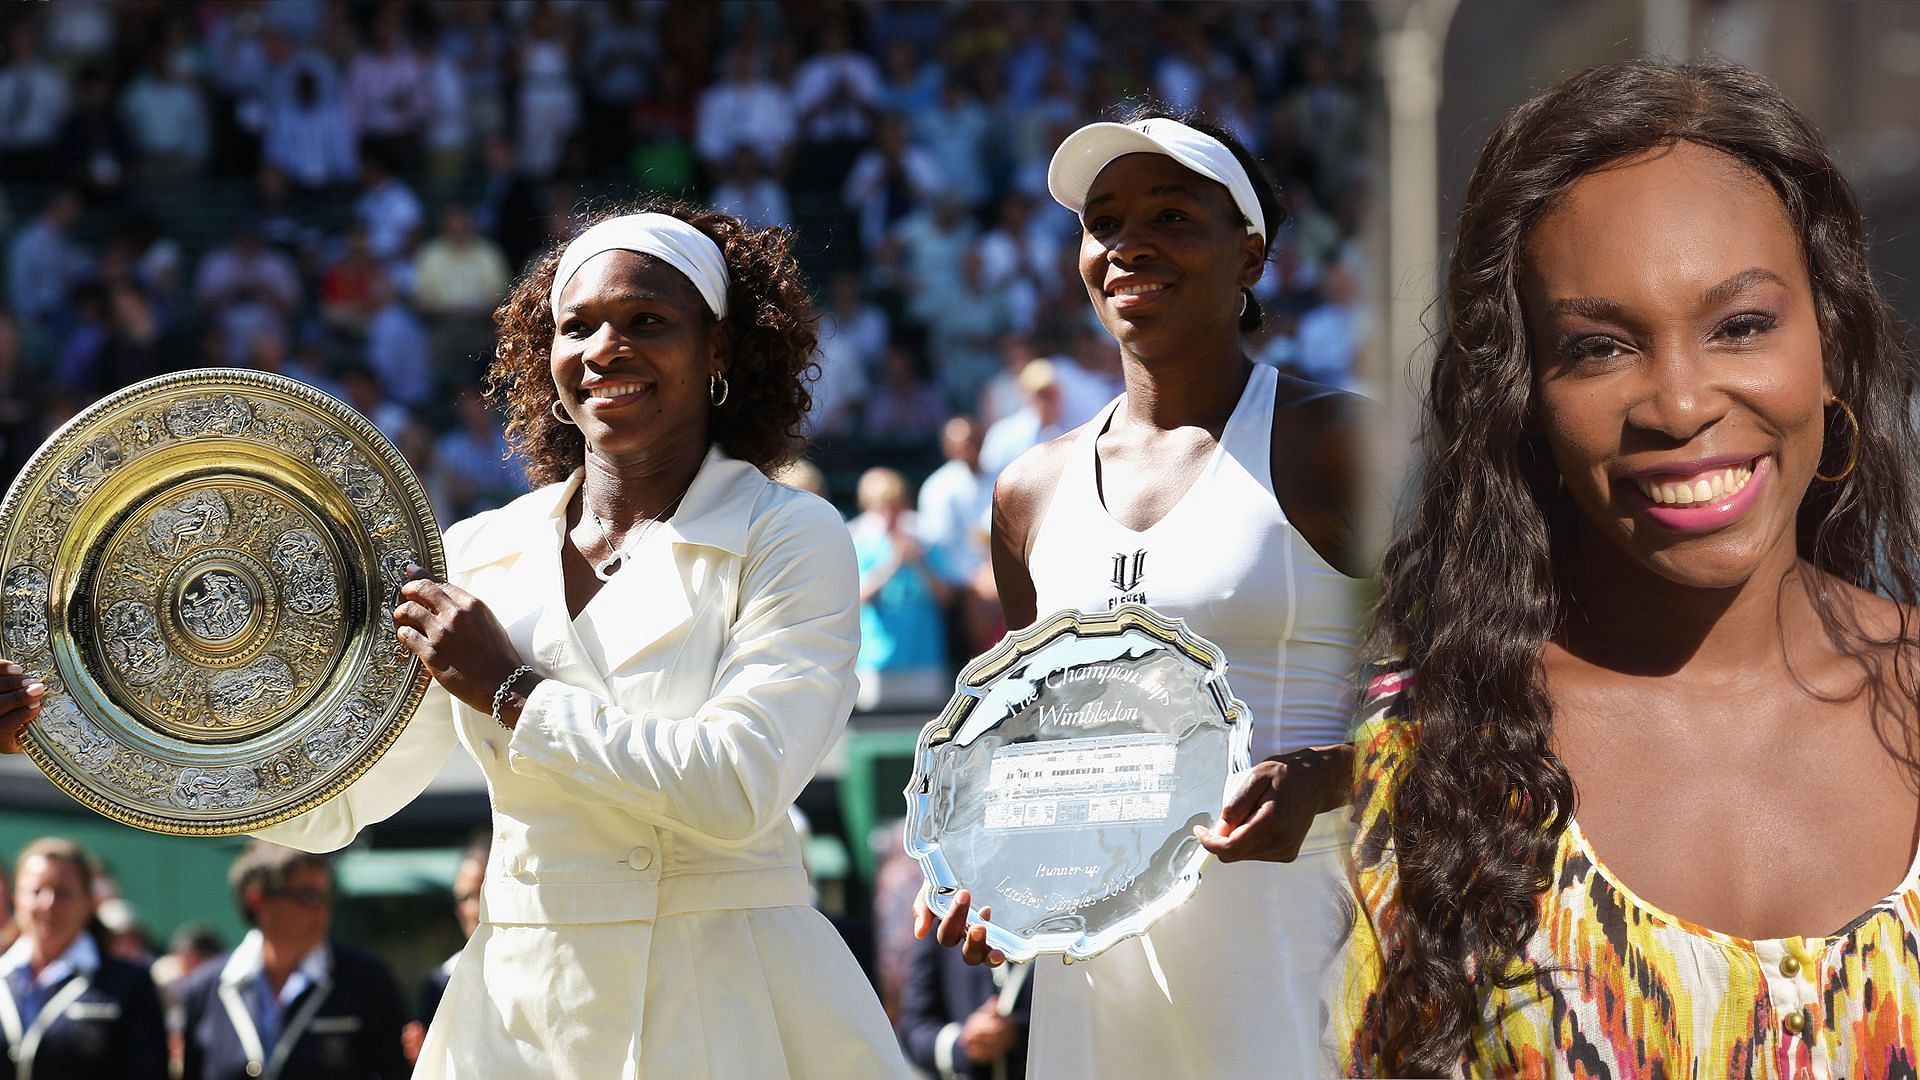 Venus Williams gives details on growing up alongside Serena Williams